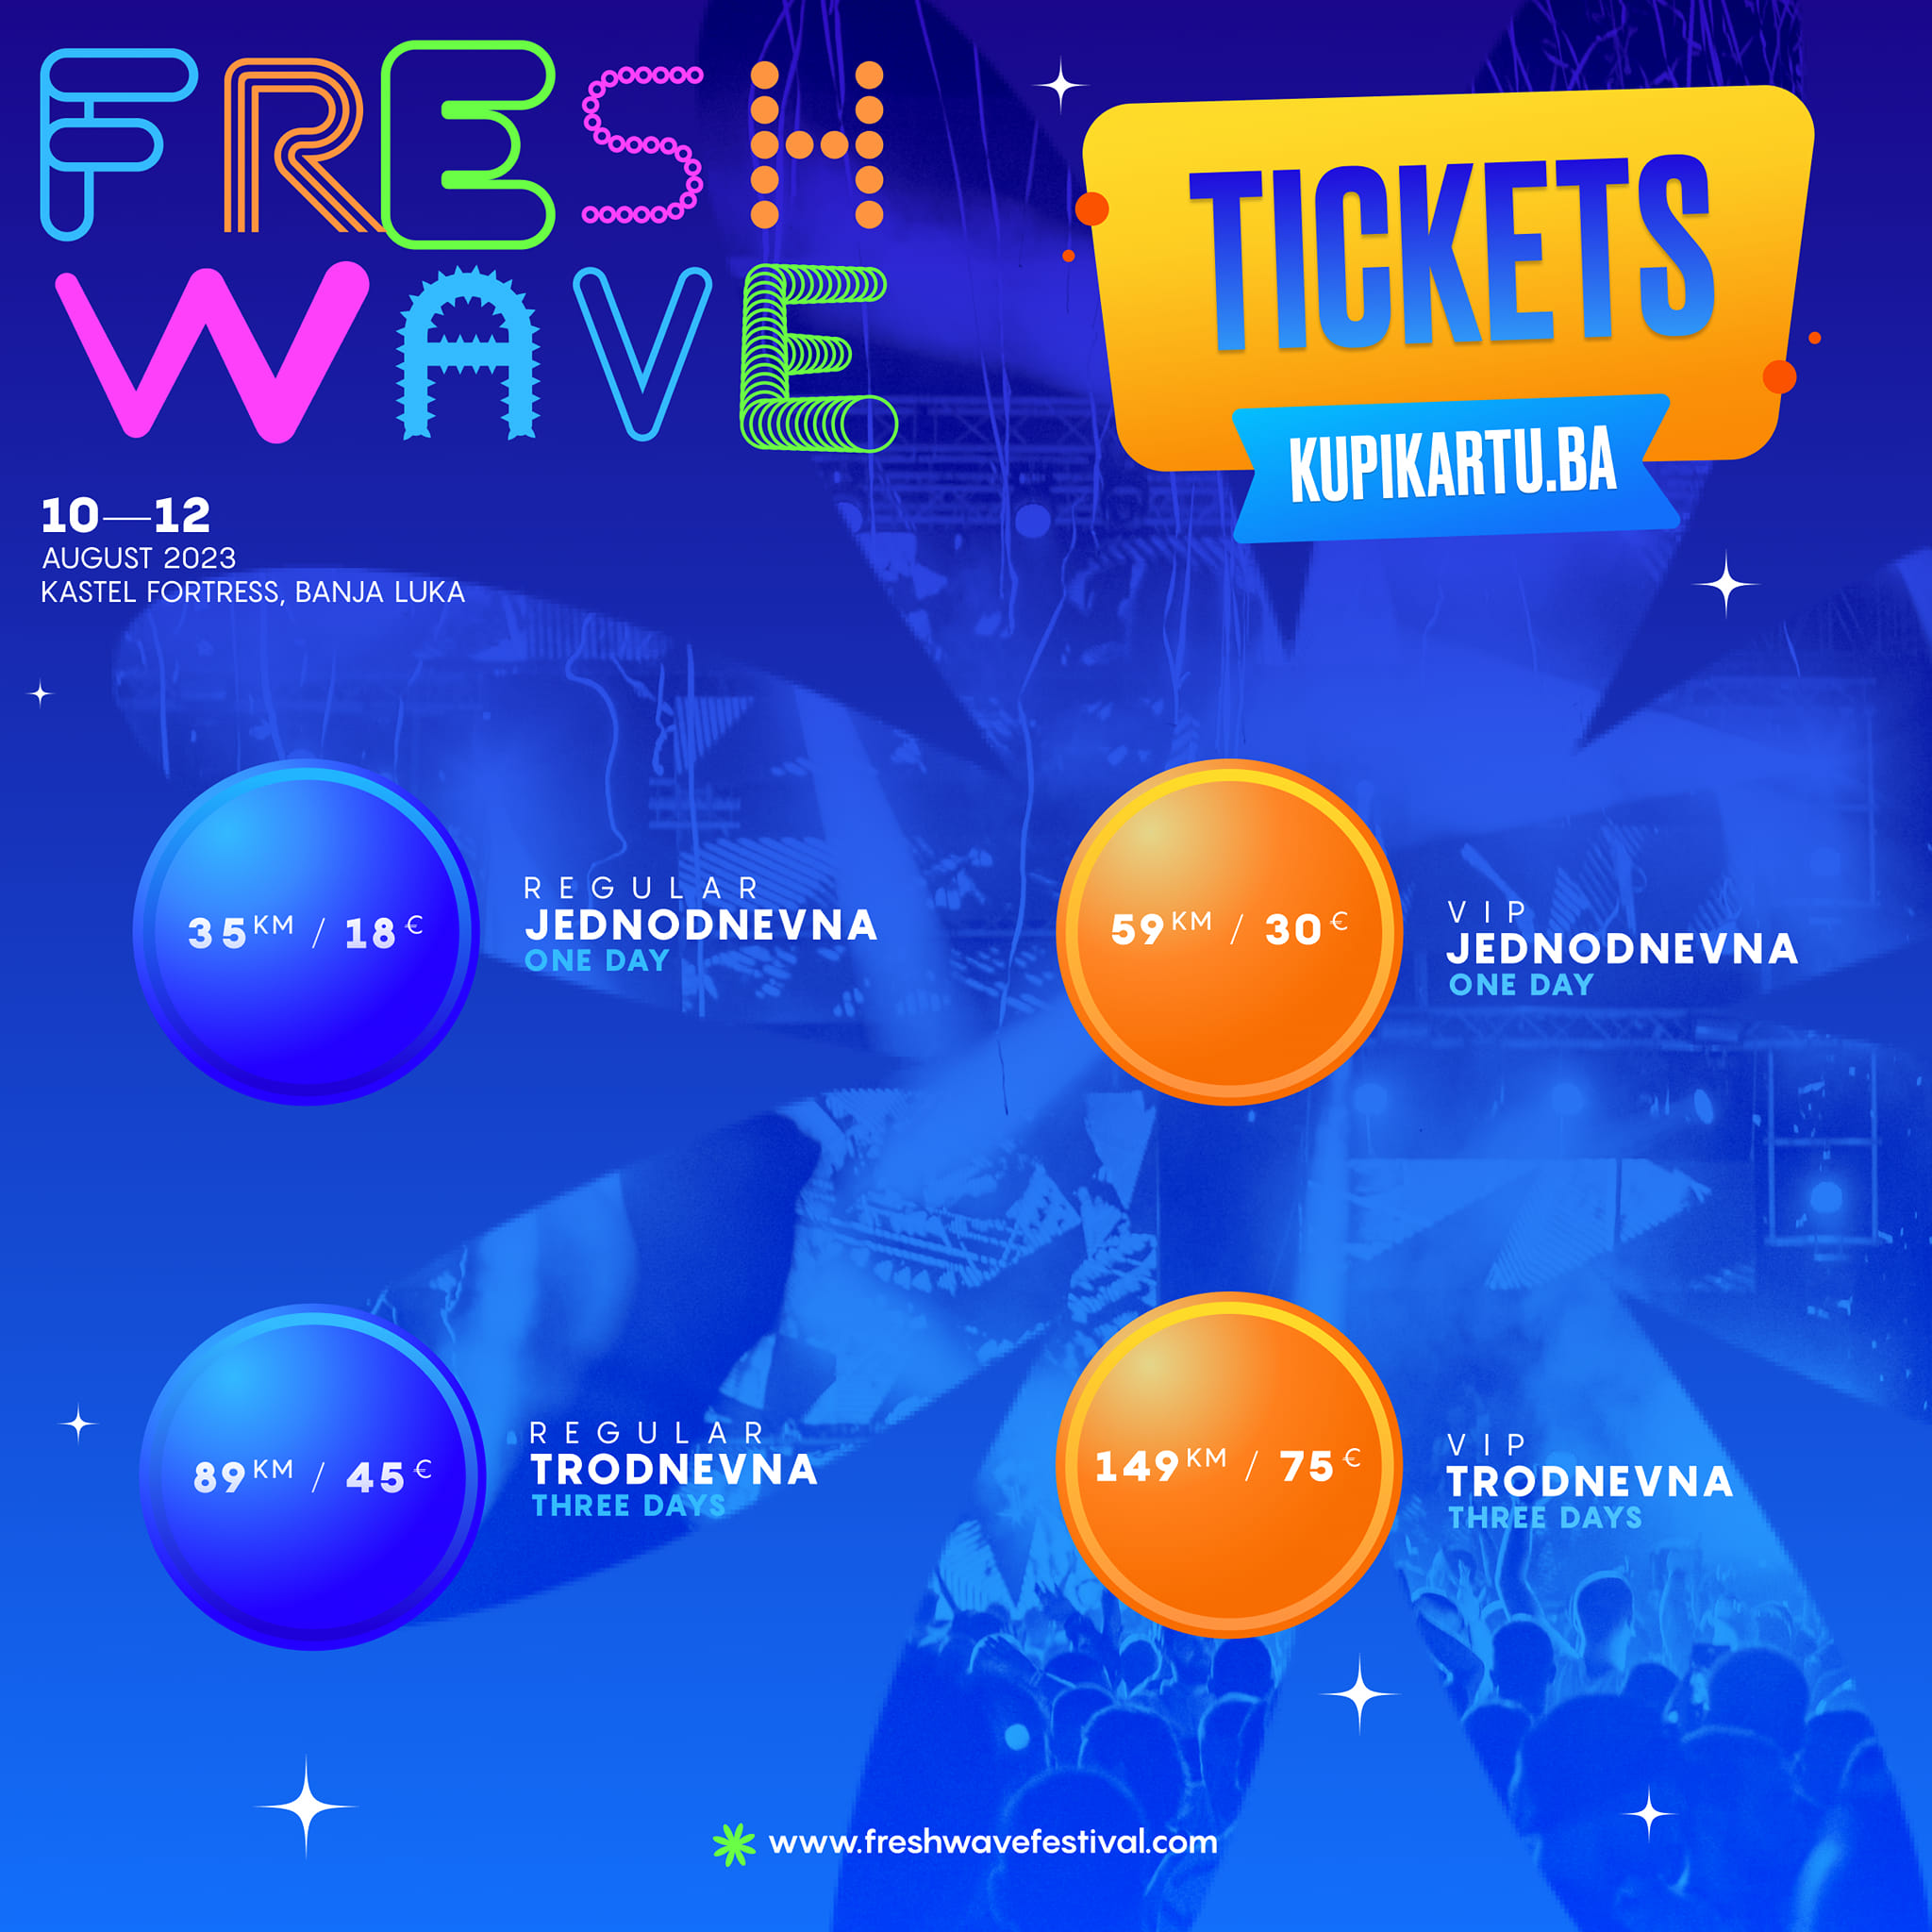 FreshWave Festival tickets